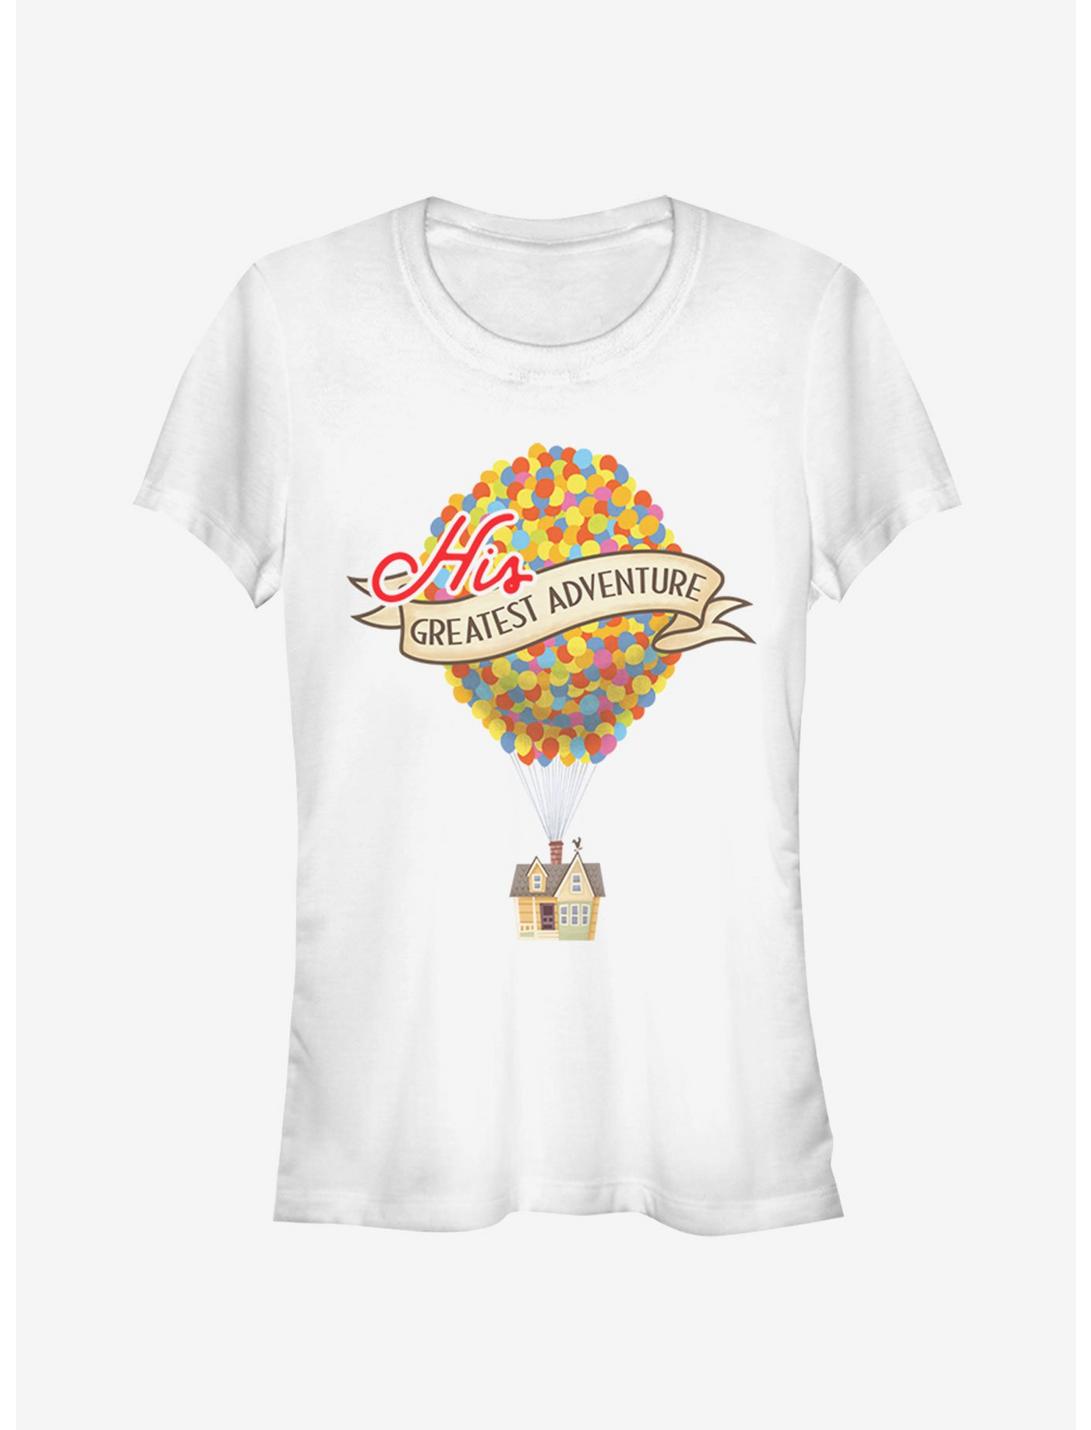 Disney Up His Greatest Adventure Girls T-Shirt, WHITE, hi-res